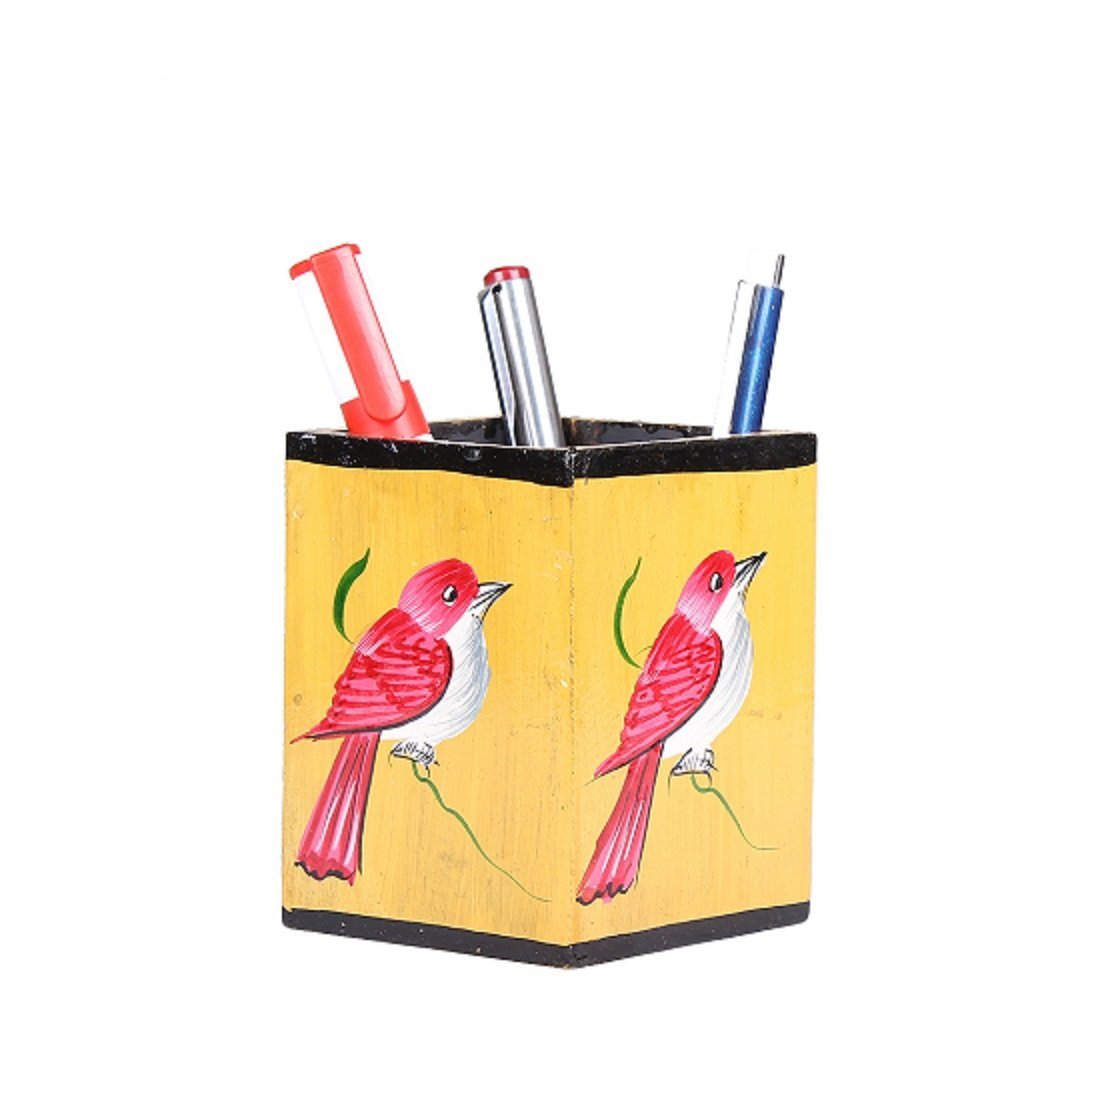 Desk Organiser - Pen Stand Handmade - for Gifts - 4 Inches - ApkaMart